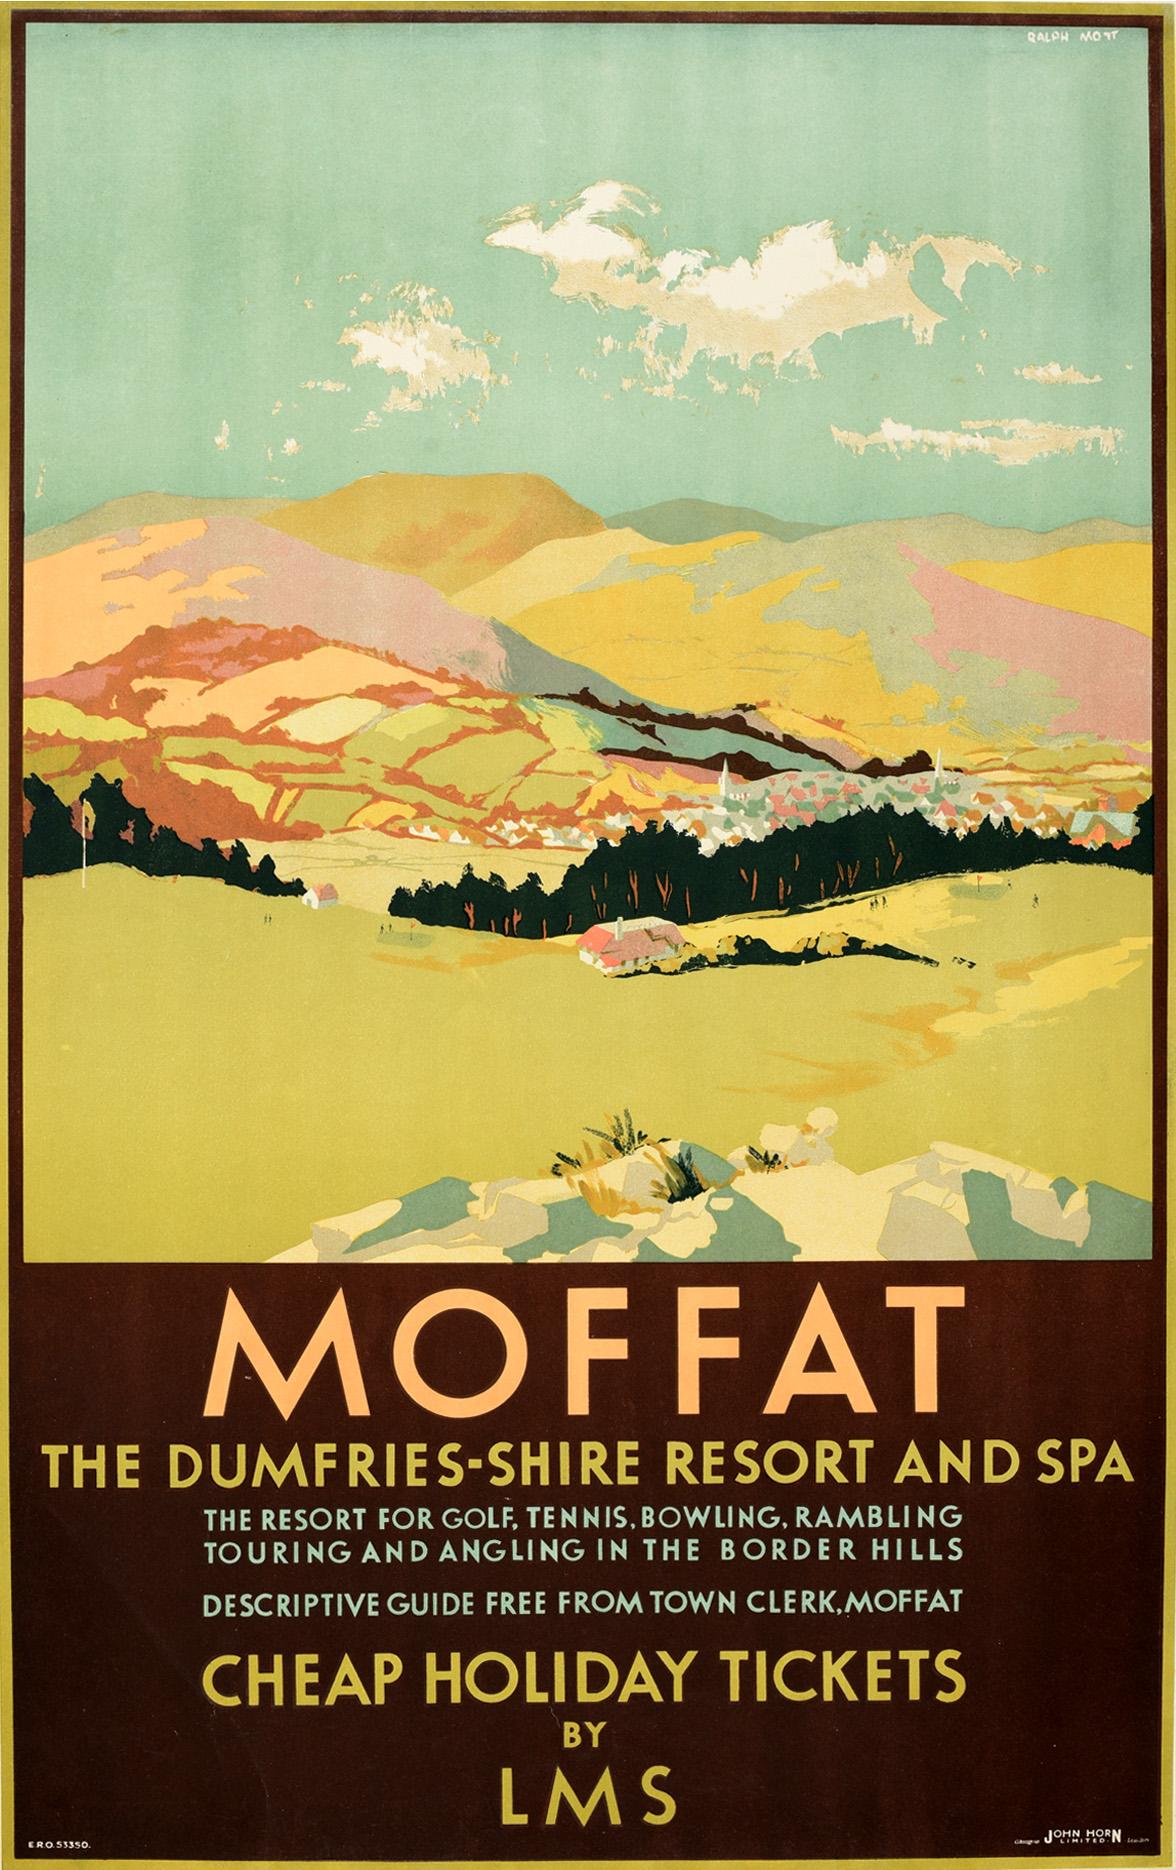 Ralph Mott Print - Original Vintage Poster For Moffat Dumfries Scotland Spa Golf LMS Railway Travel